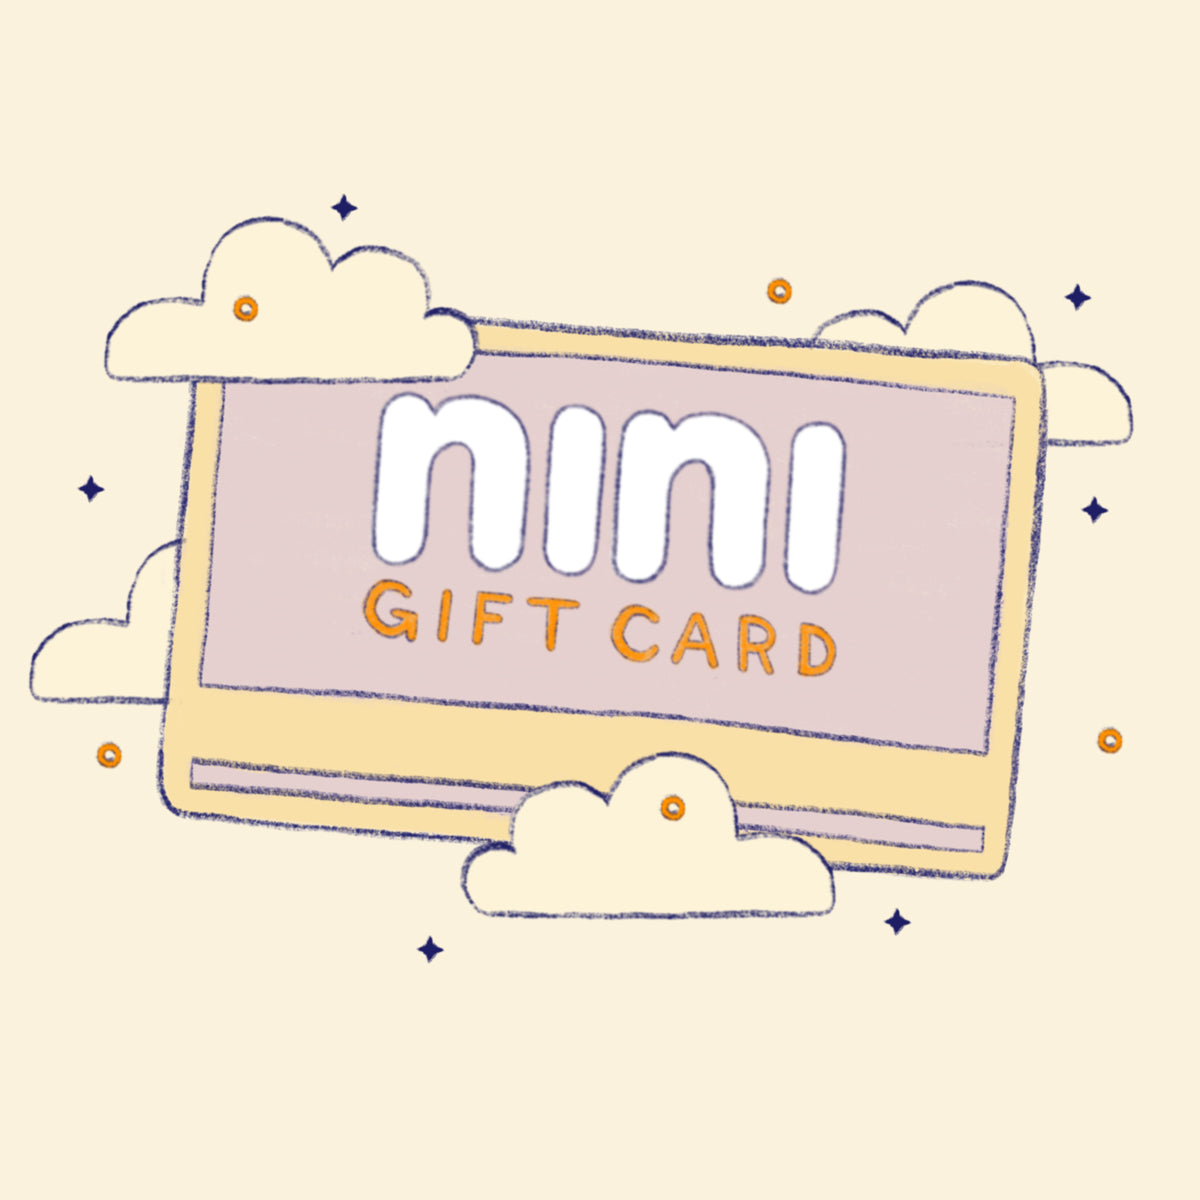 With Nini Digital Gift Card